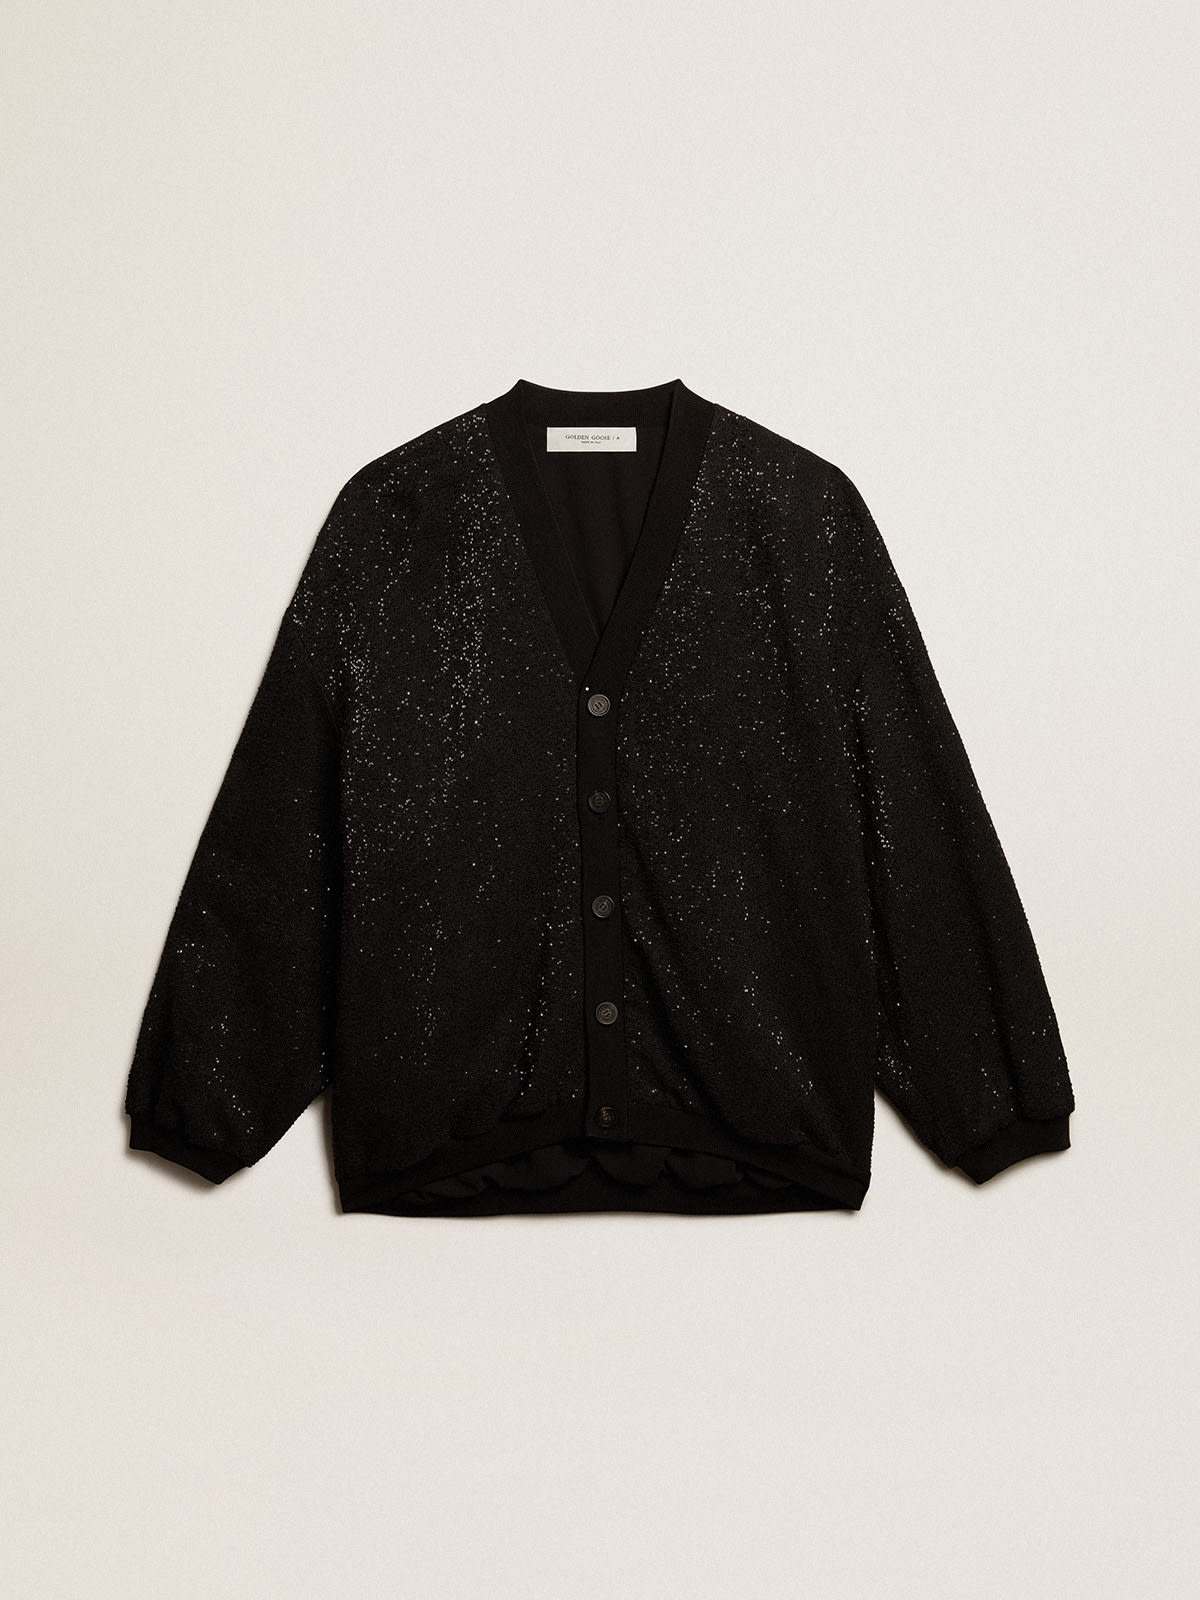 Men’s black sequined cardigan-jacket